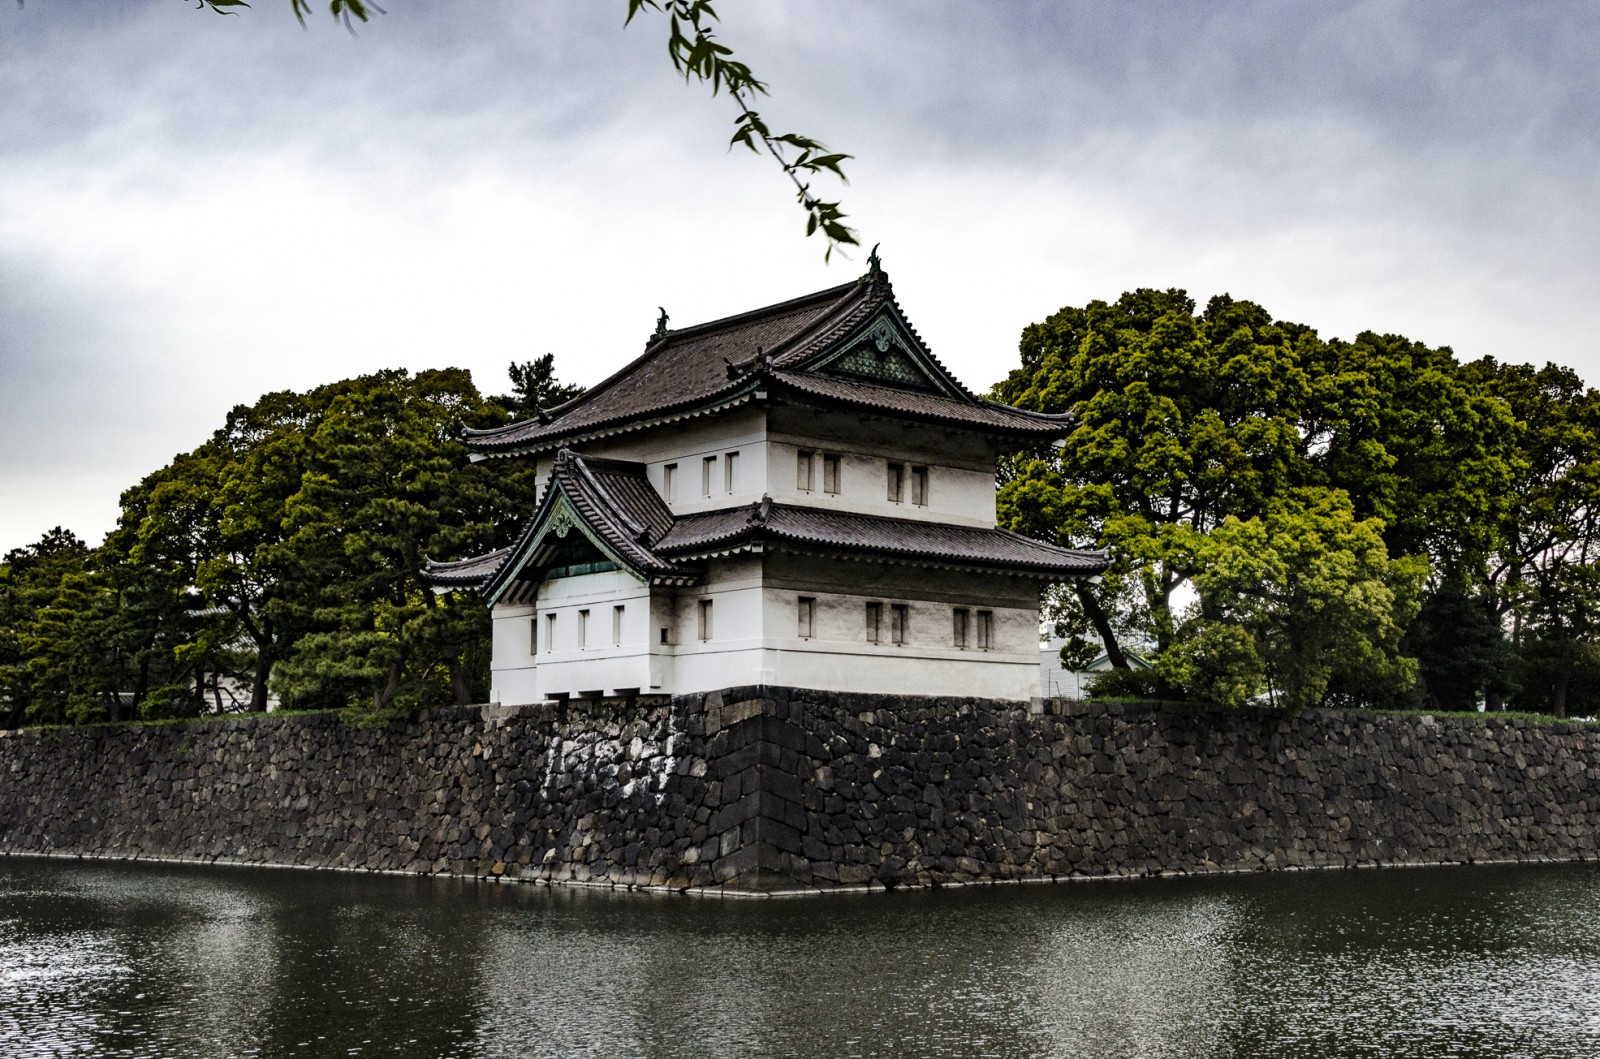 Entre Os Dias 1 E 9 De Dezembro Estara Aberta As Portas Para O Publico Do Espaco Restrito Do Palacio Imperial De Toquio Mundo Nipo